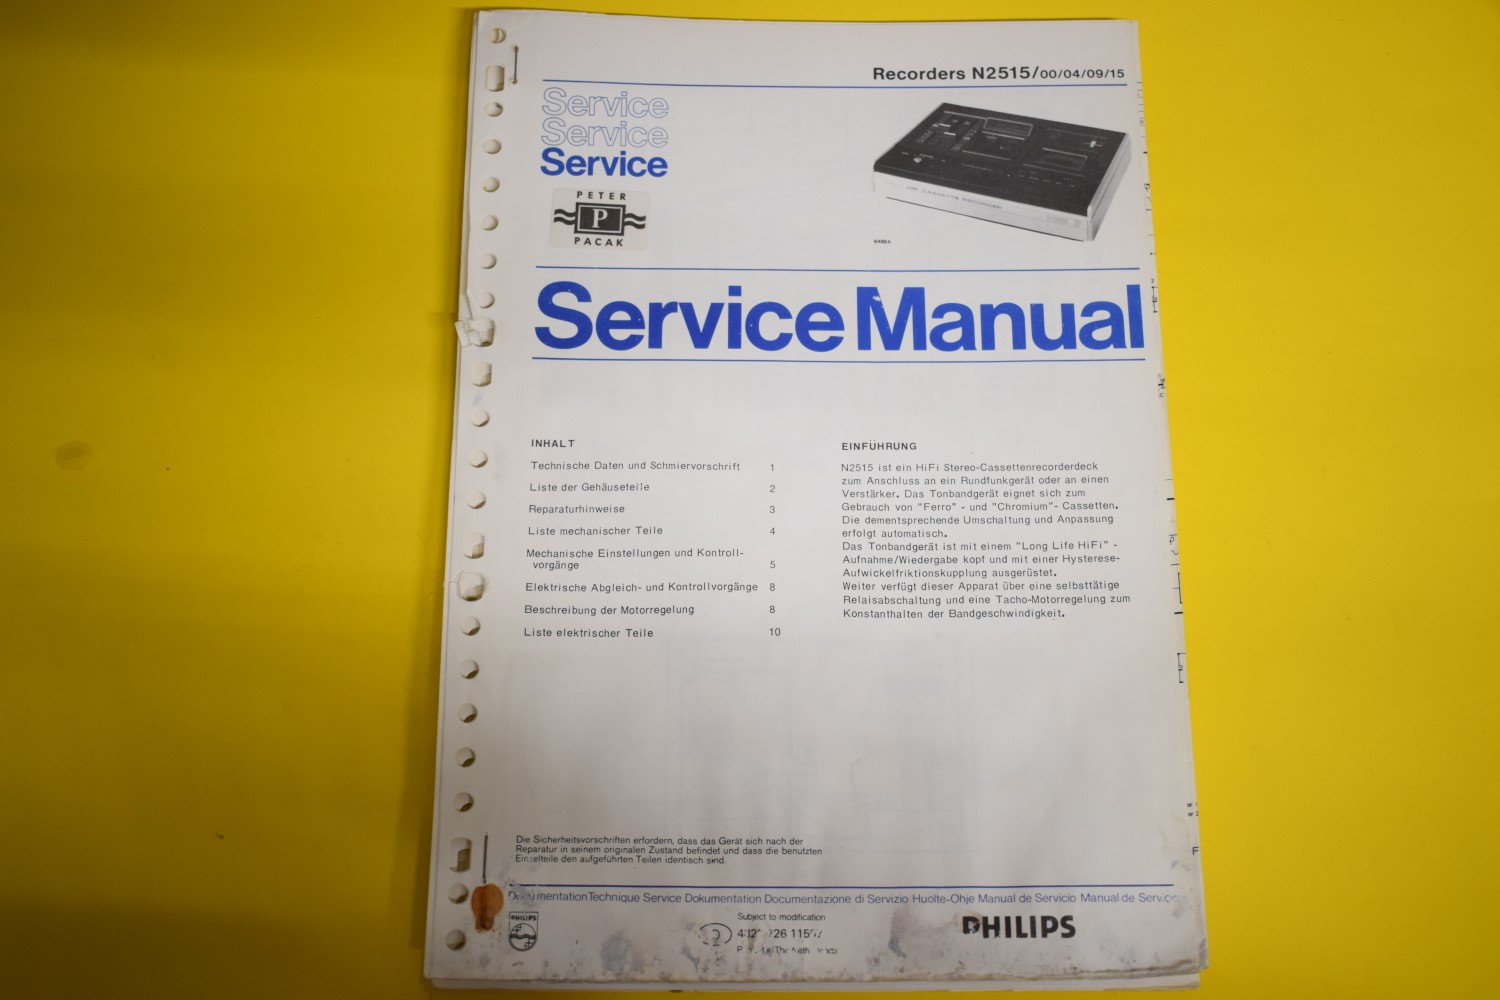 Philips N2515 cassettedeck Service Manual – German